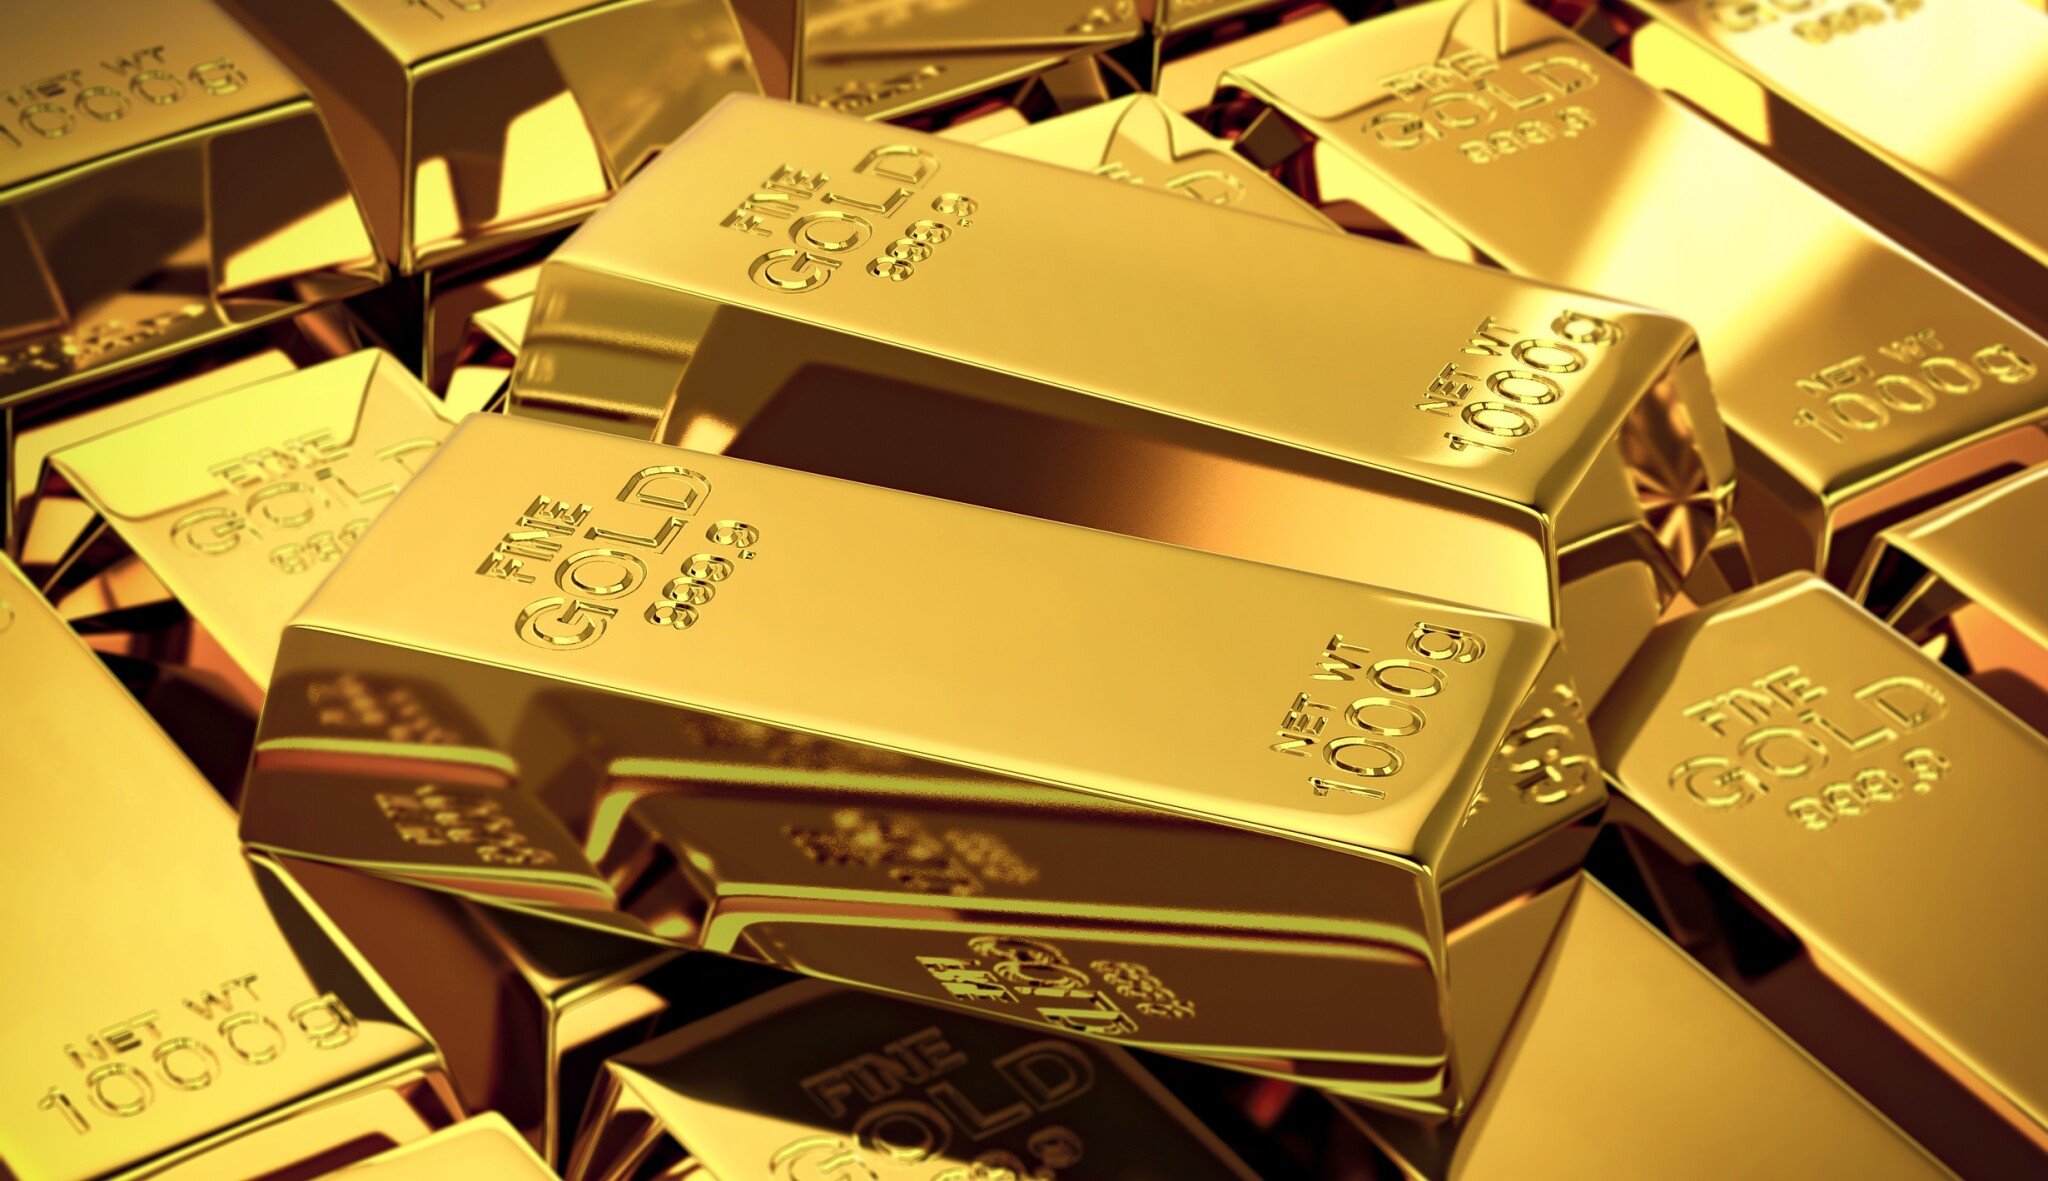 Cena zlata prudce klesá. Od začátku roku zlevnilo o deset procent